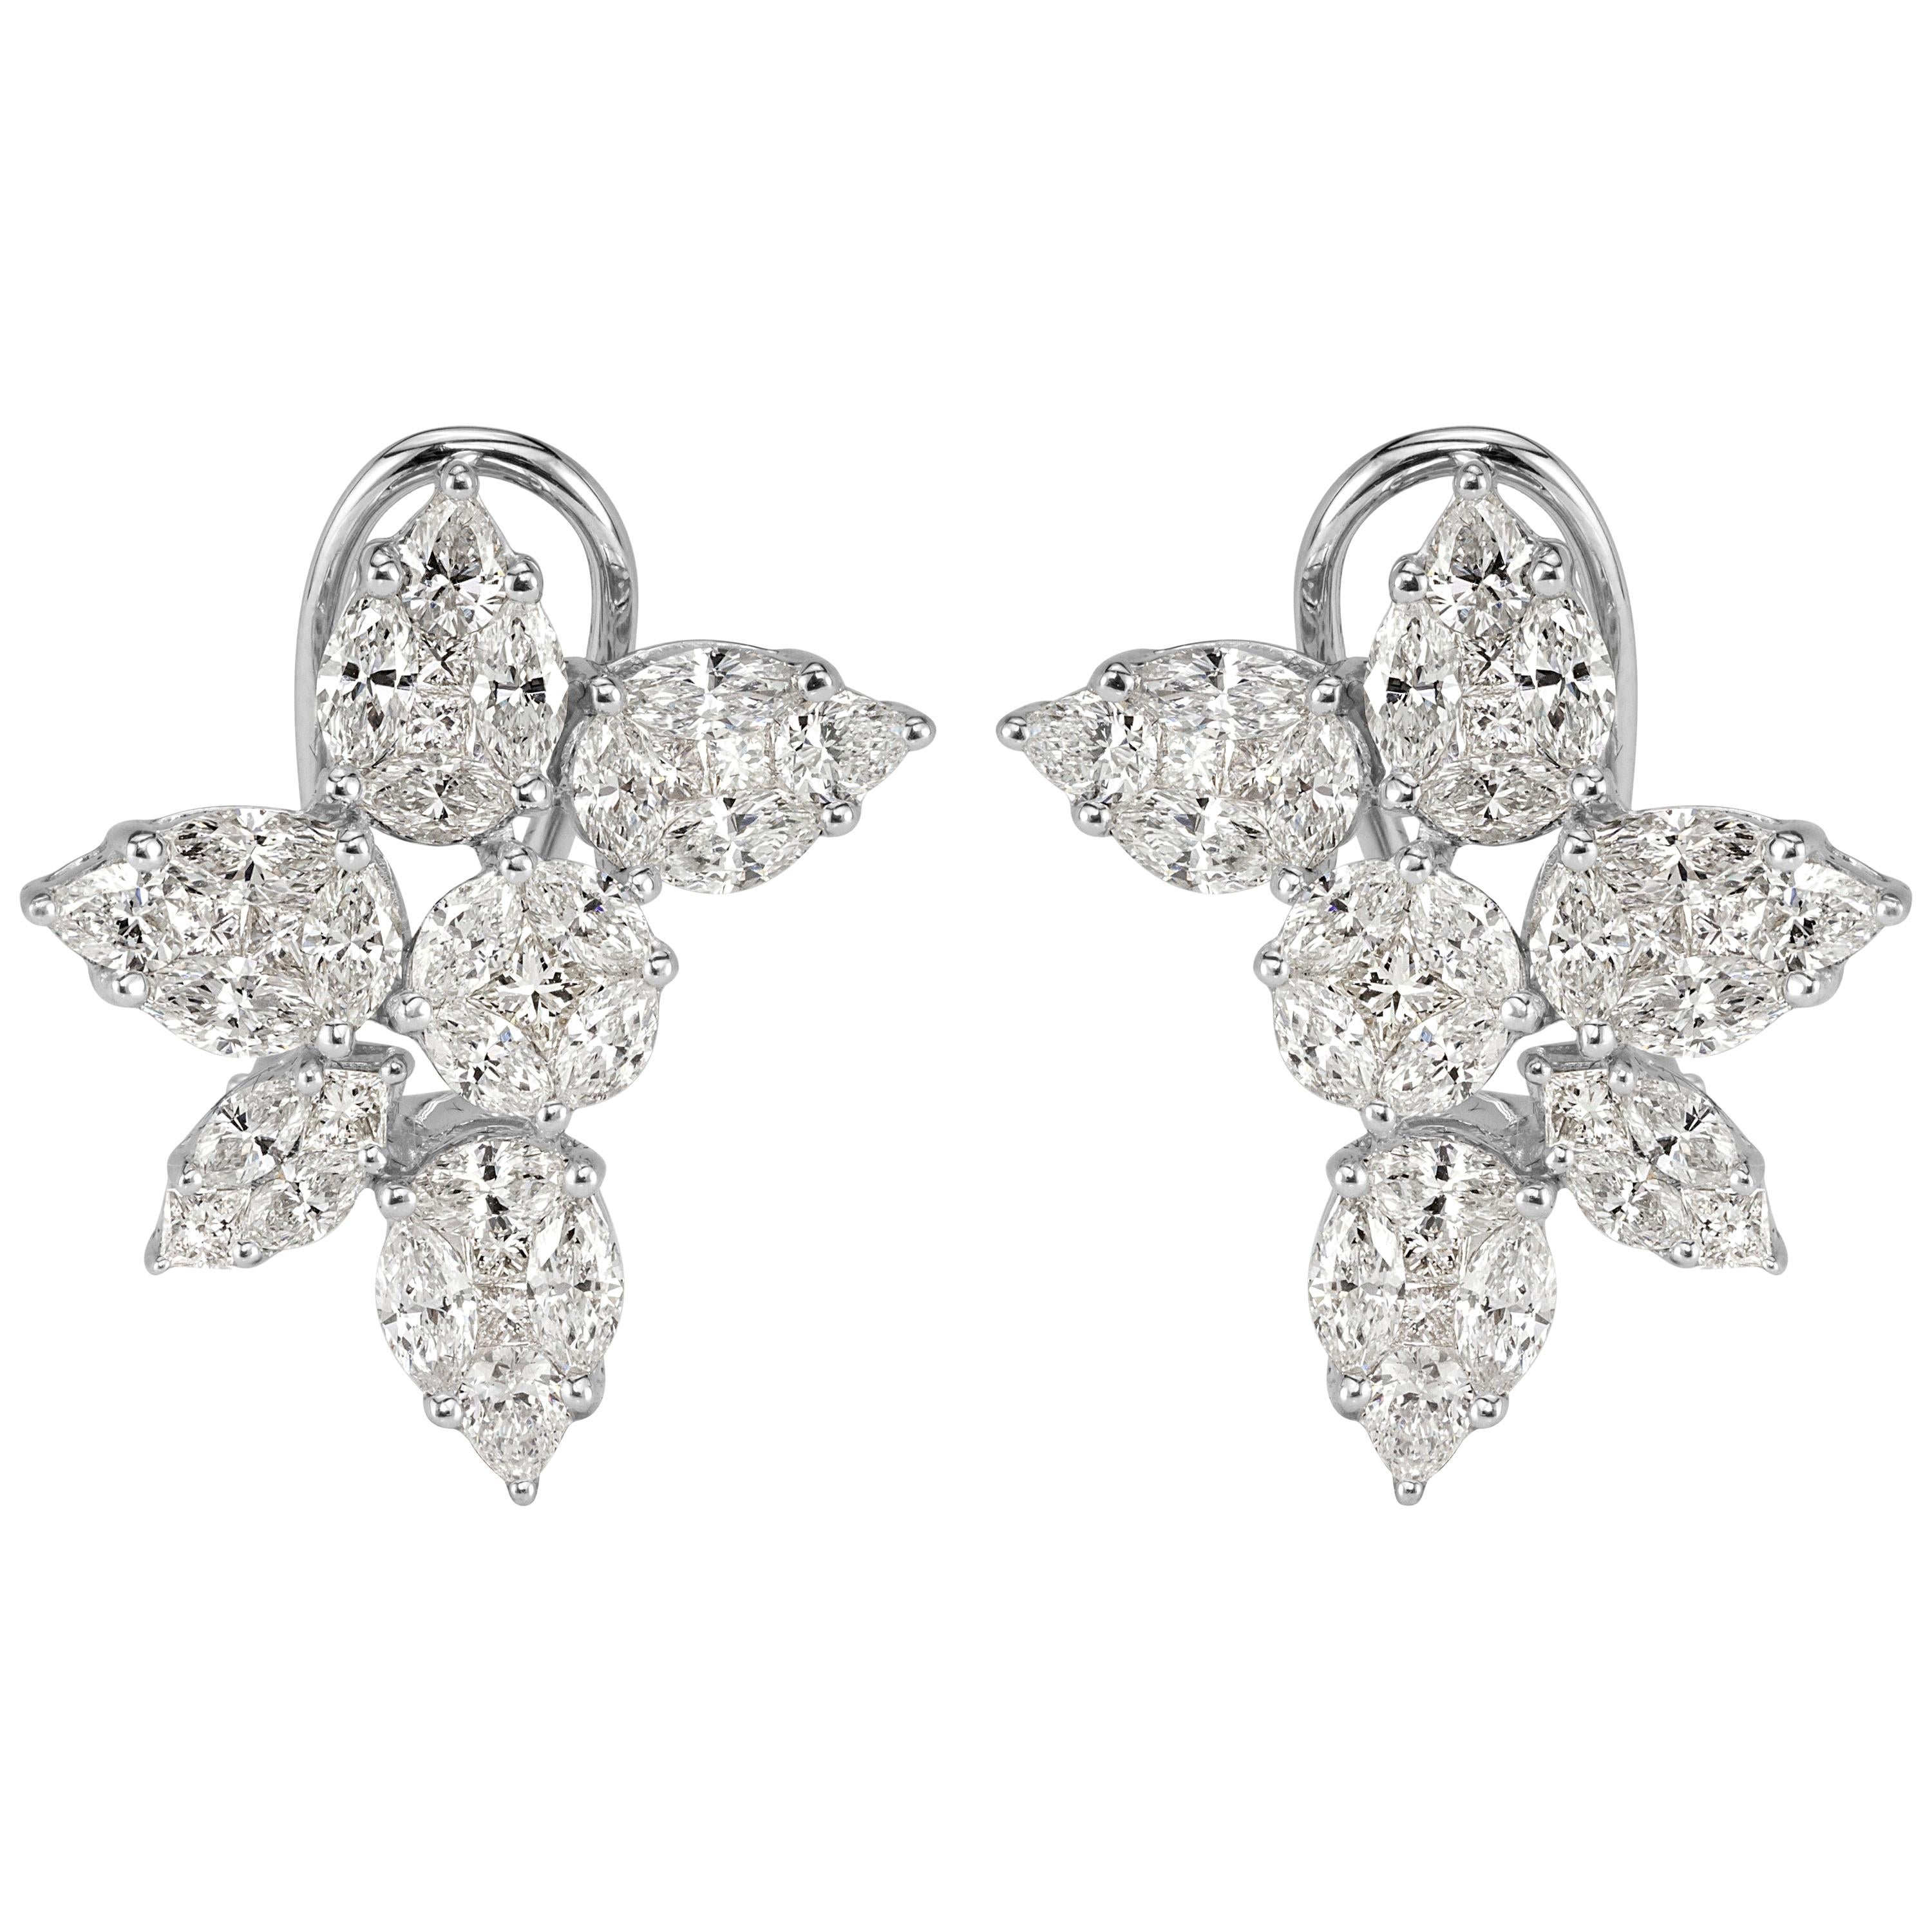 Mark Broumand 4.00 Carat Floral Cluster Diamond Earrings